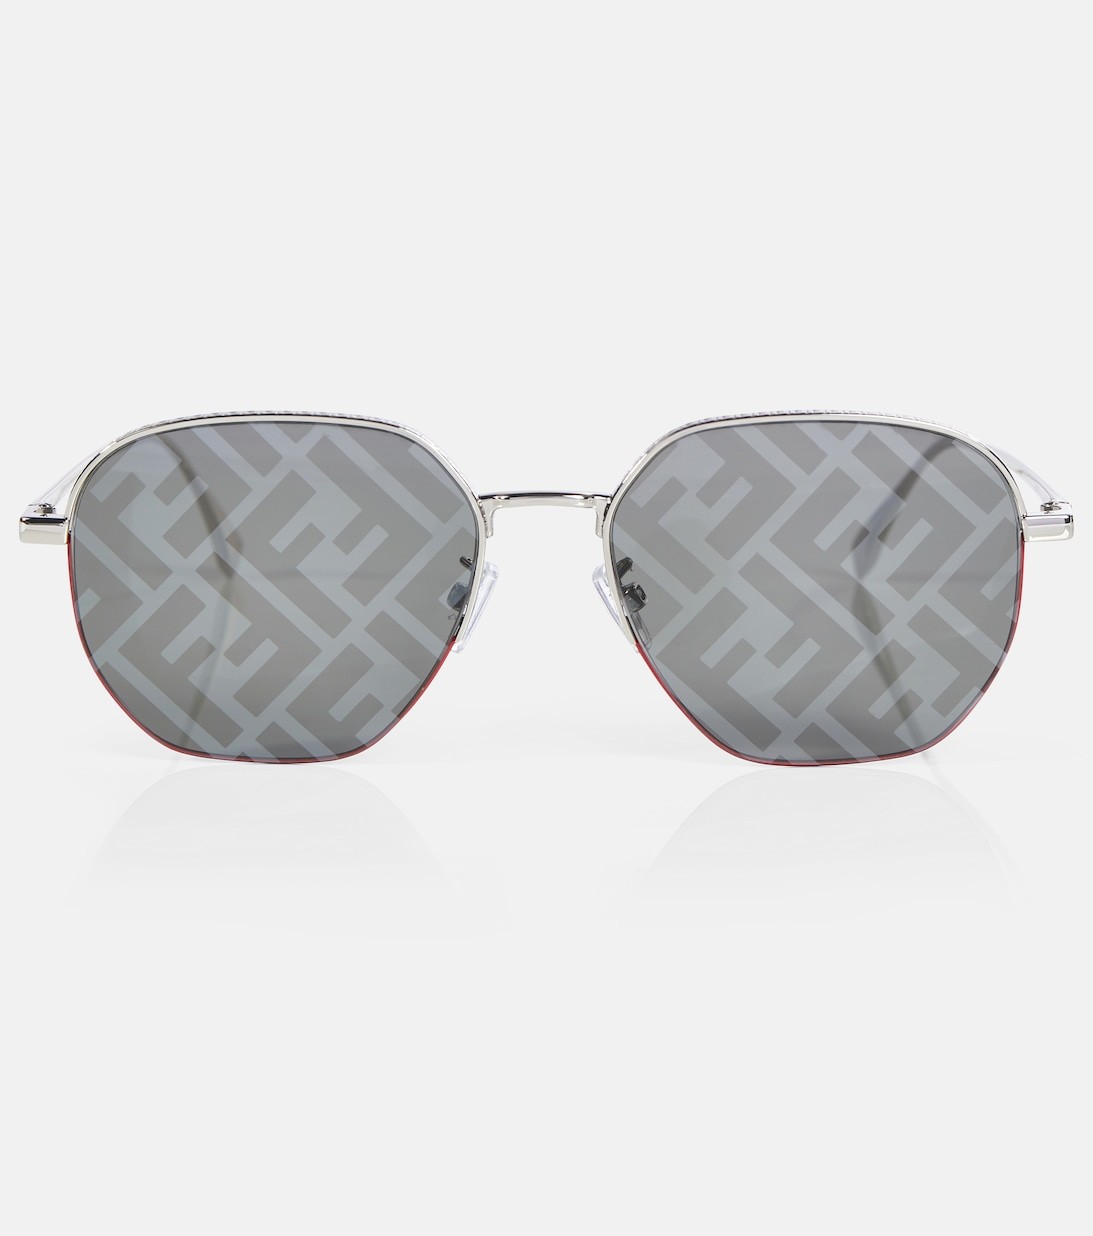 Fendi - Travel Geometric Sunglasses - Gray